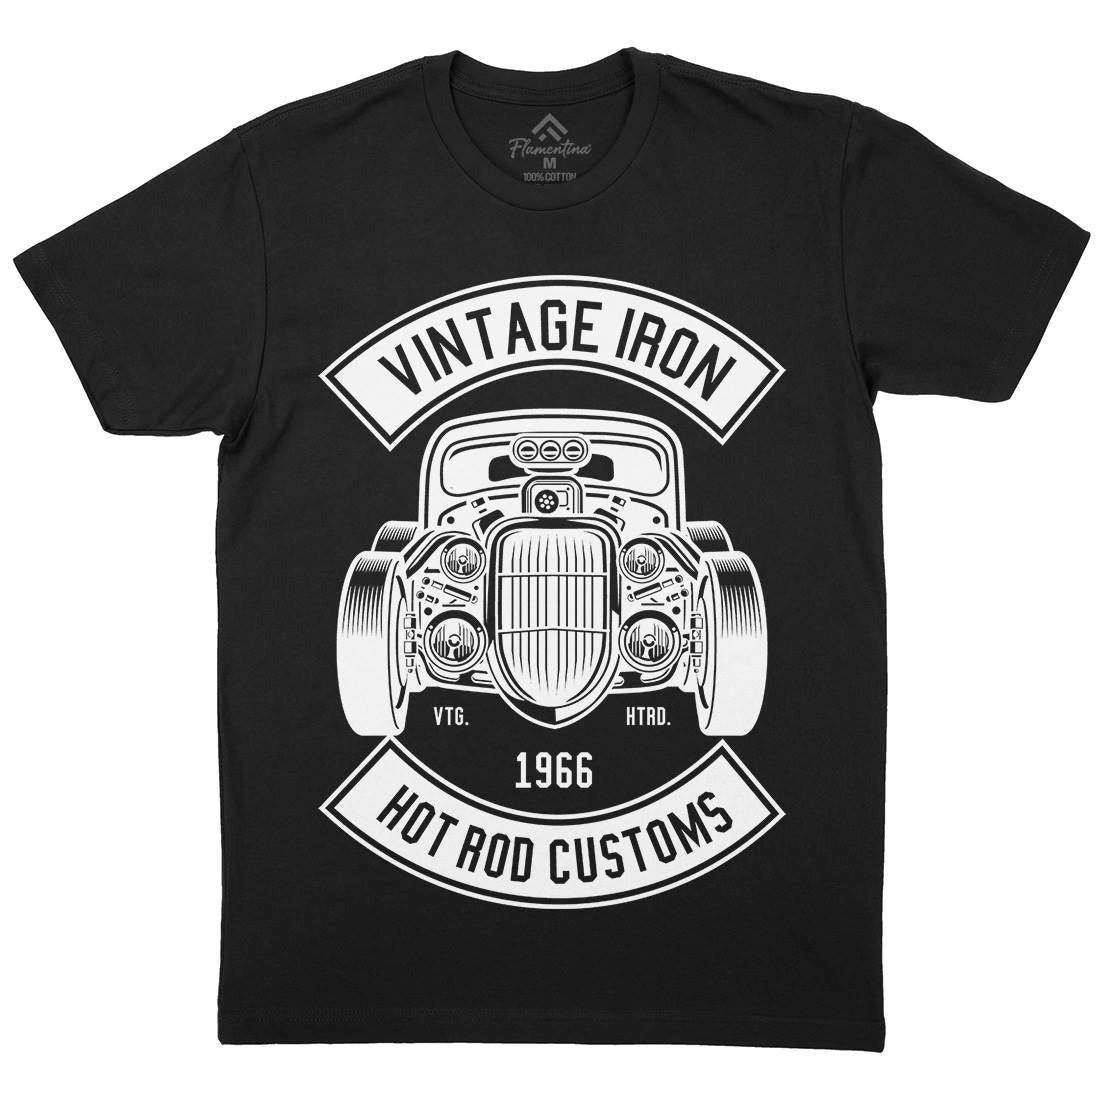 Vintage Iron Mens Crew Neck T-Shirt Cars B666